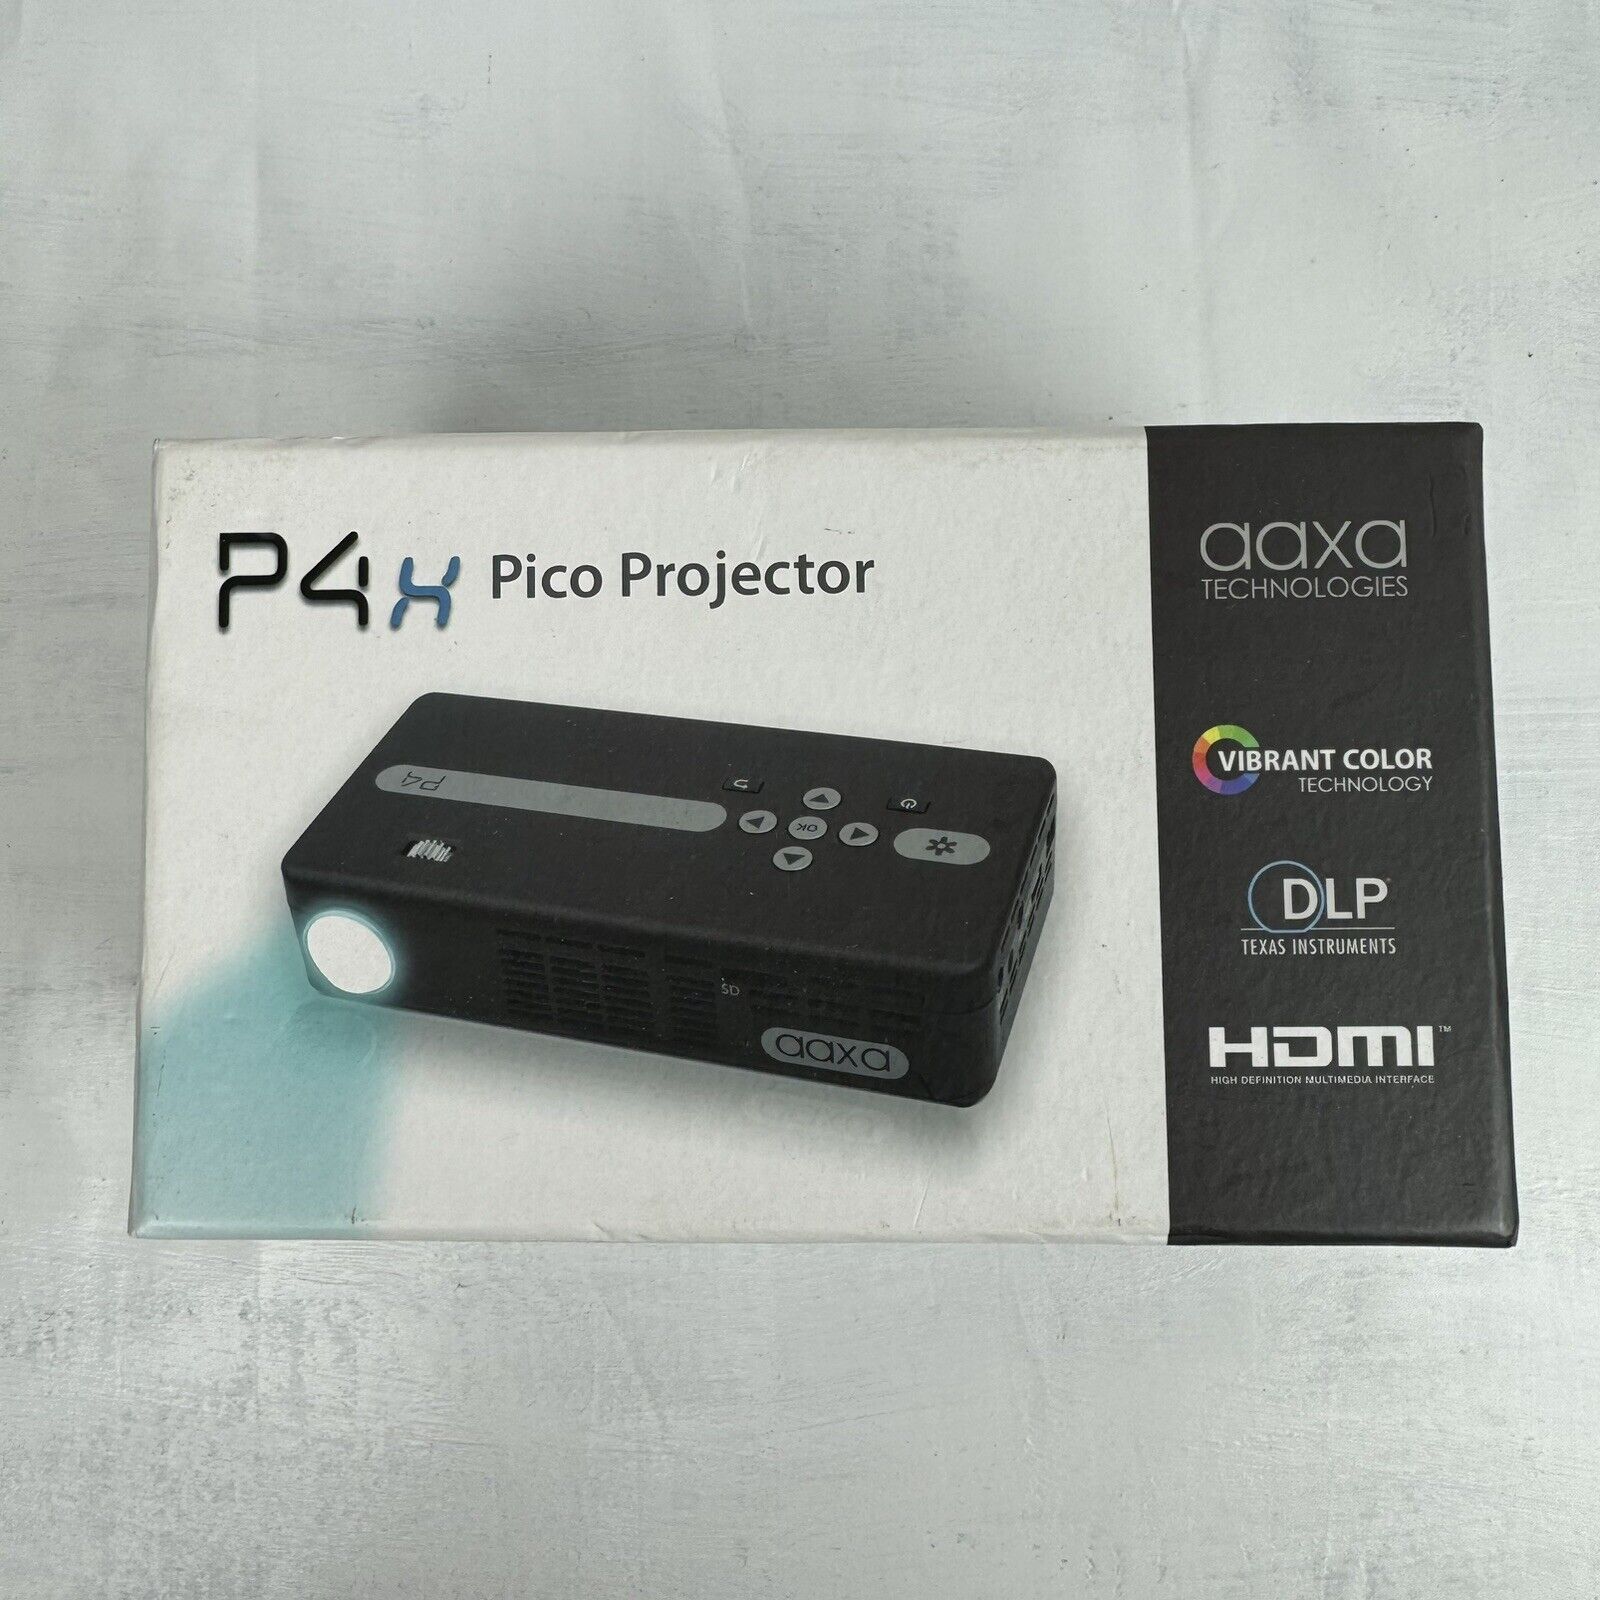 P4X Pico Projector aaxa Technologies Texas Instruments Media Player DLP RGB LED